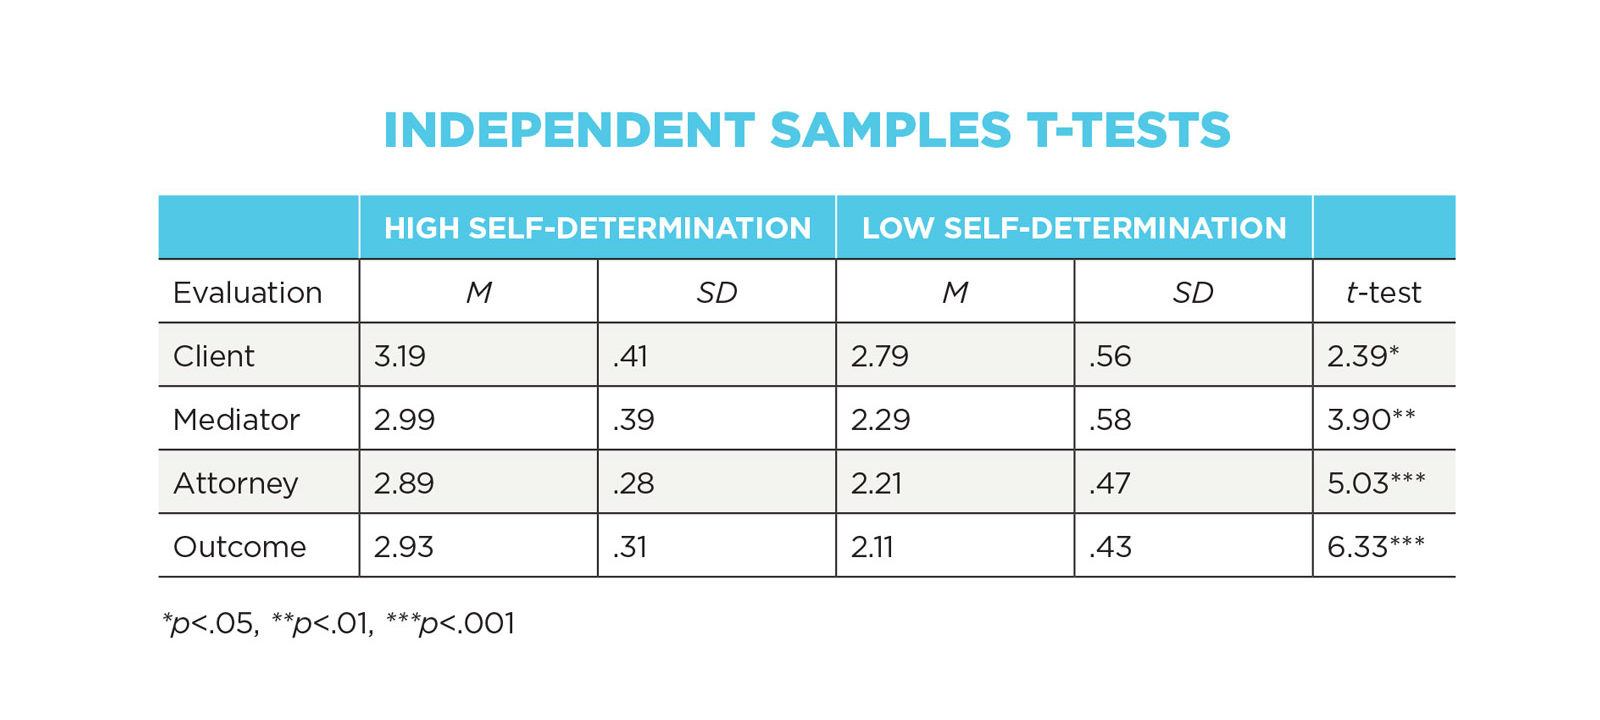 Independent Samples t-Tests